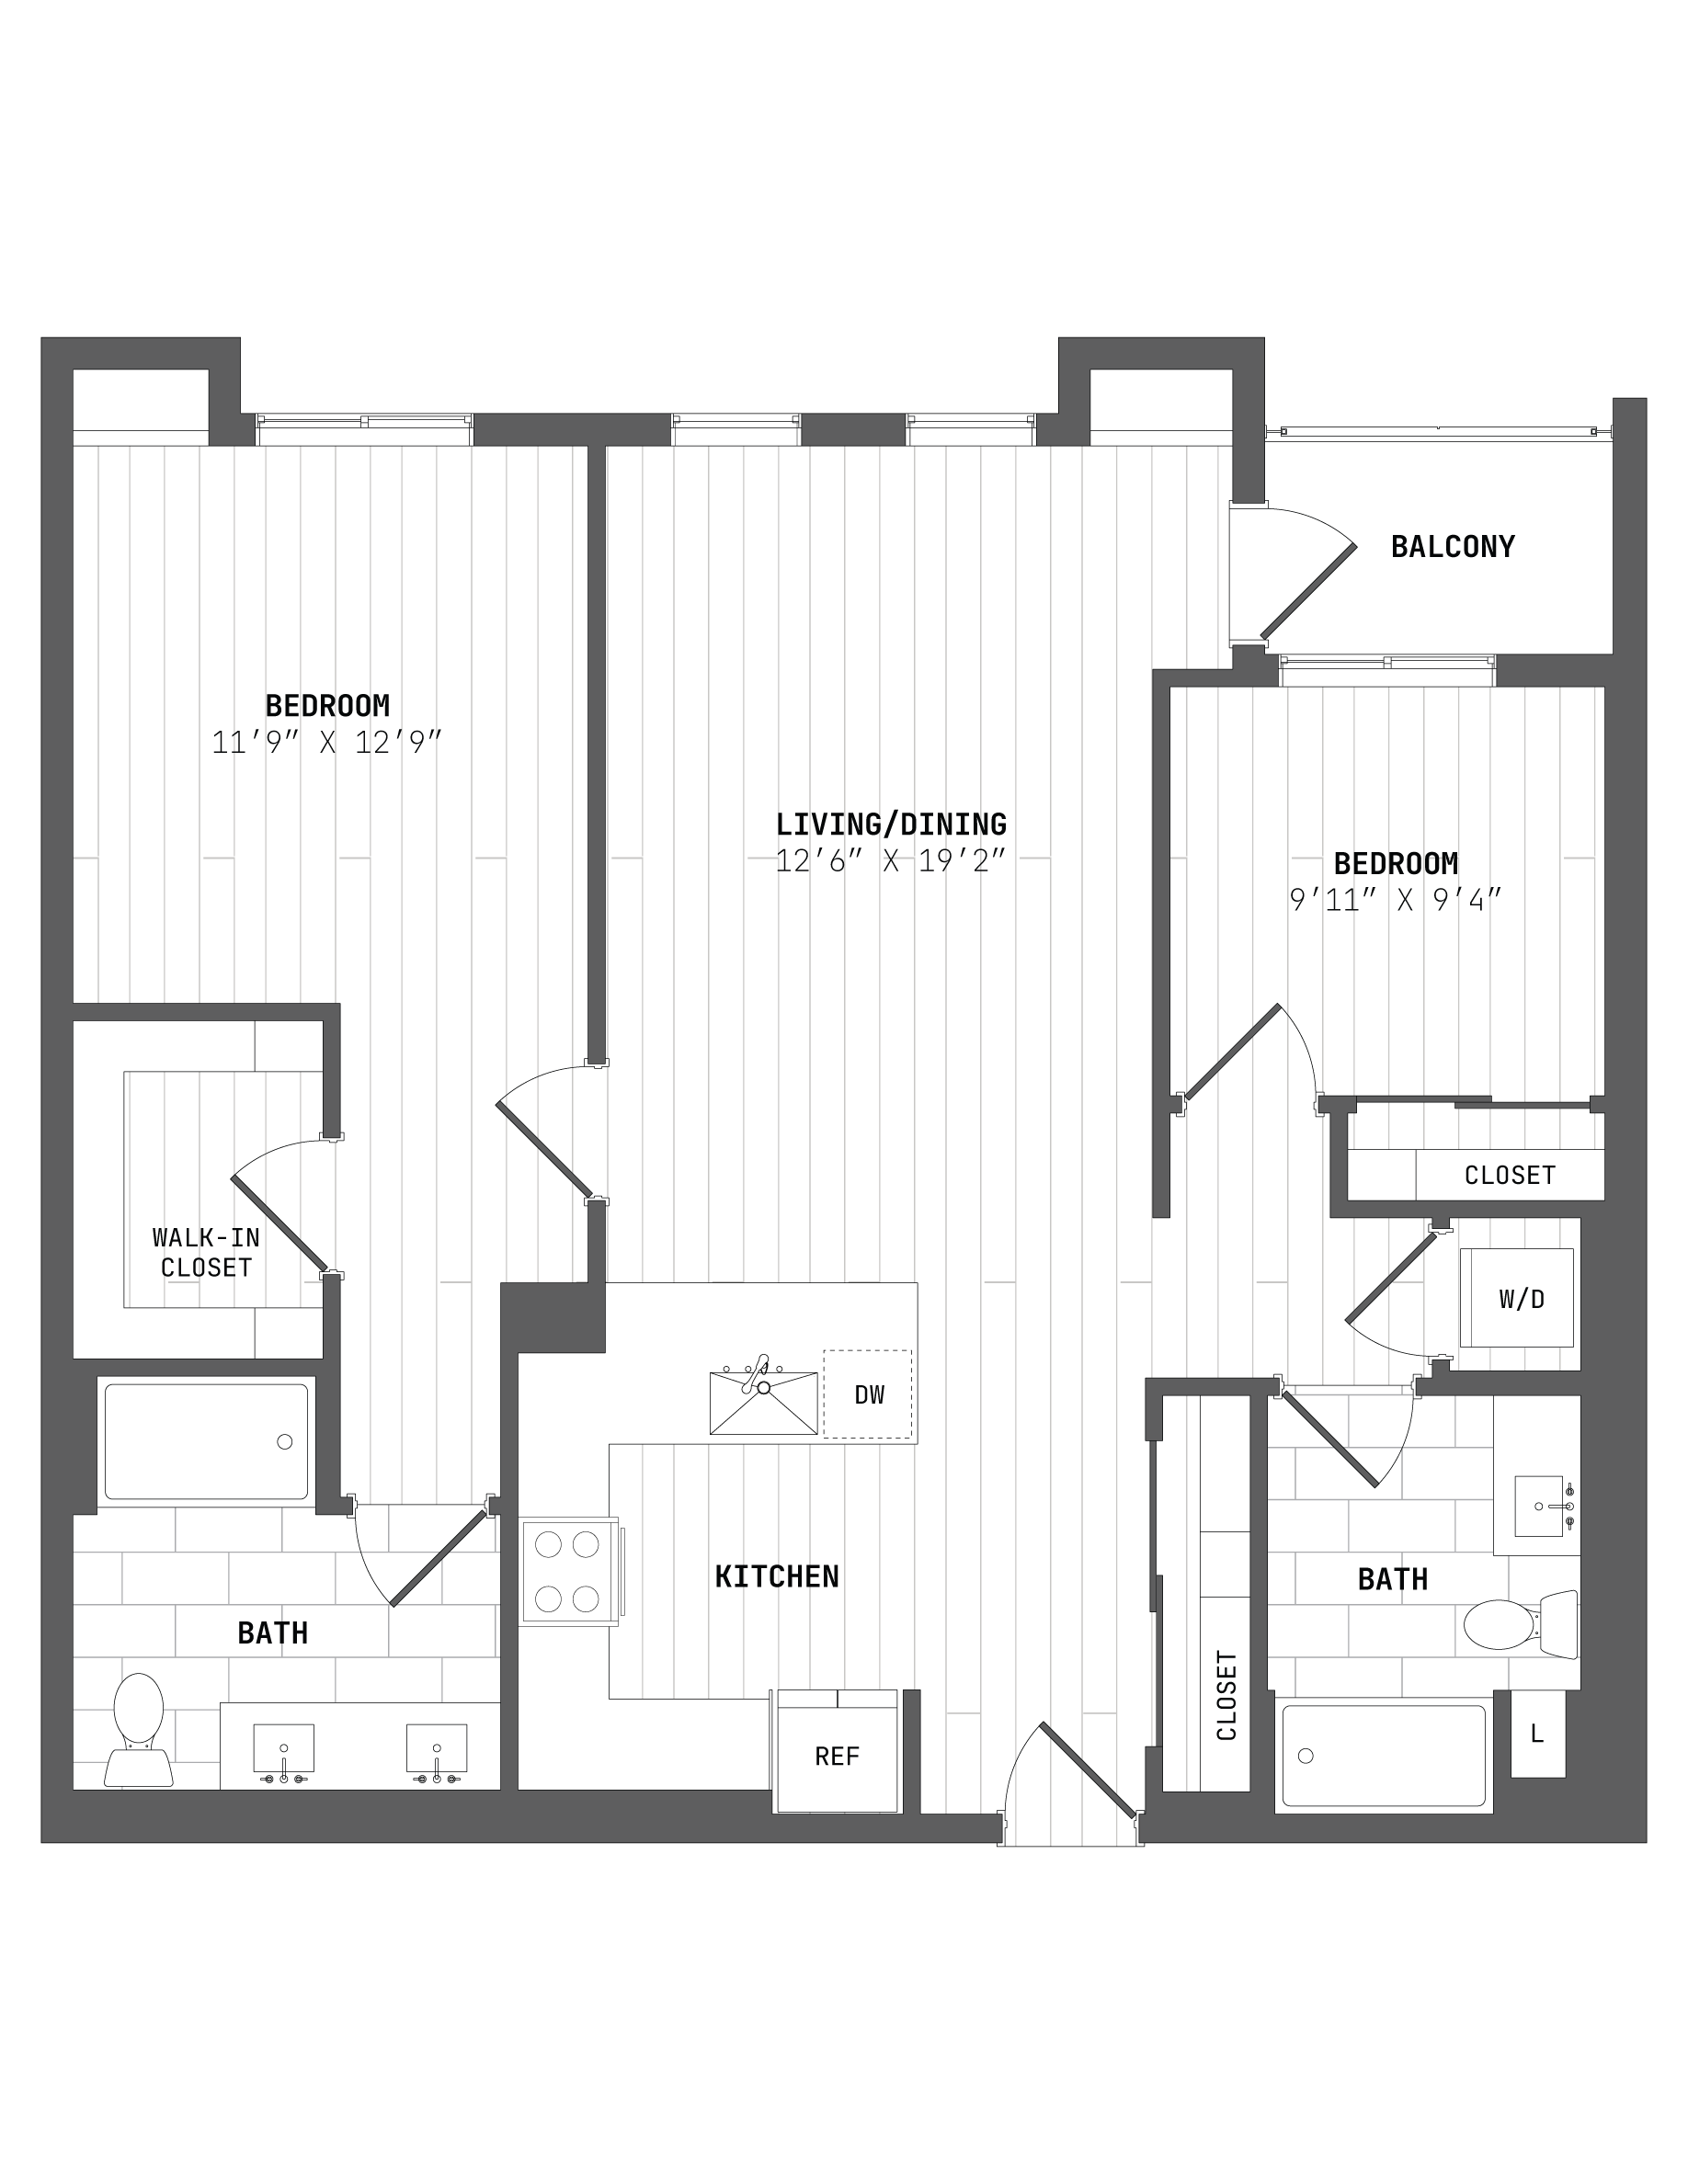 Apartment 4785243 floorplan